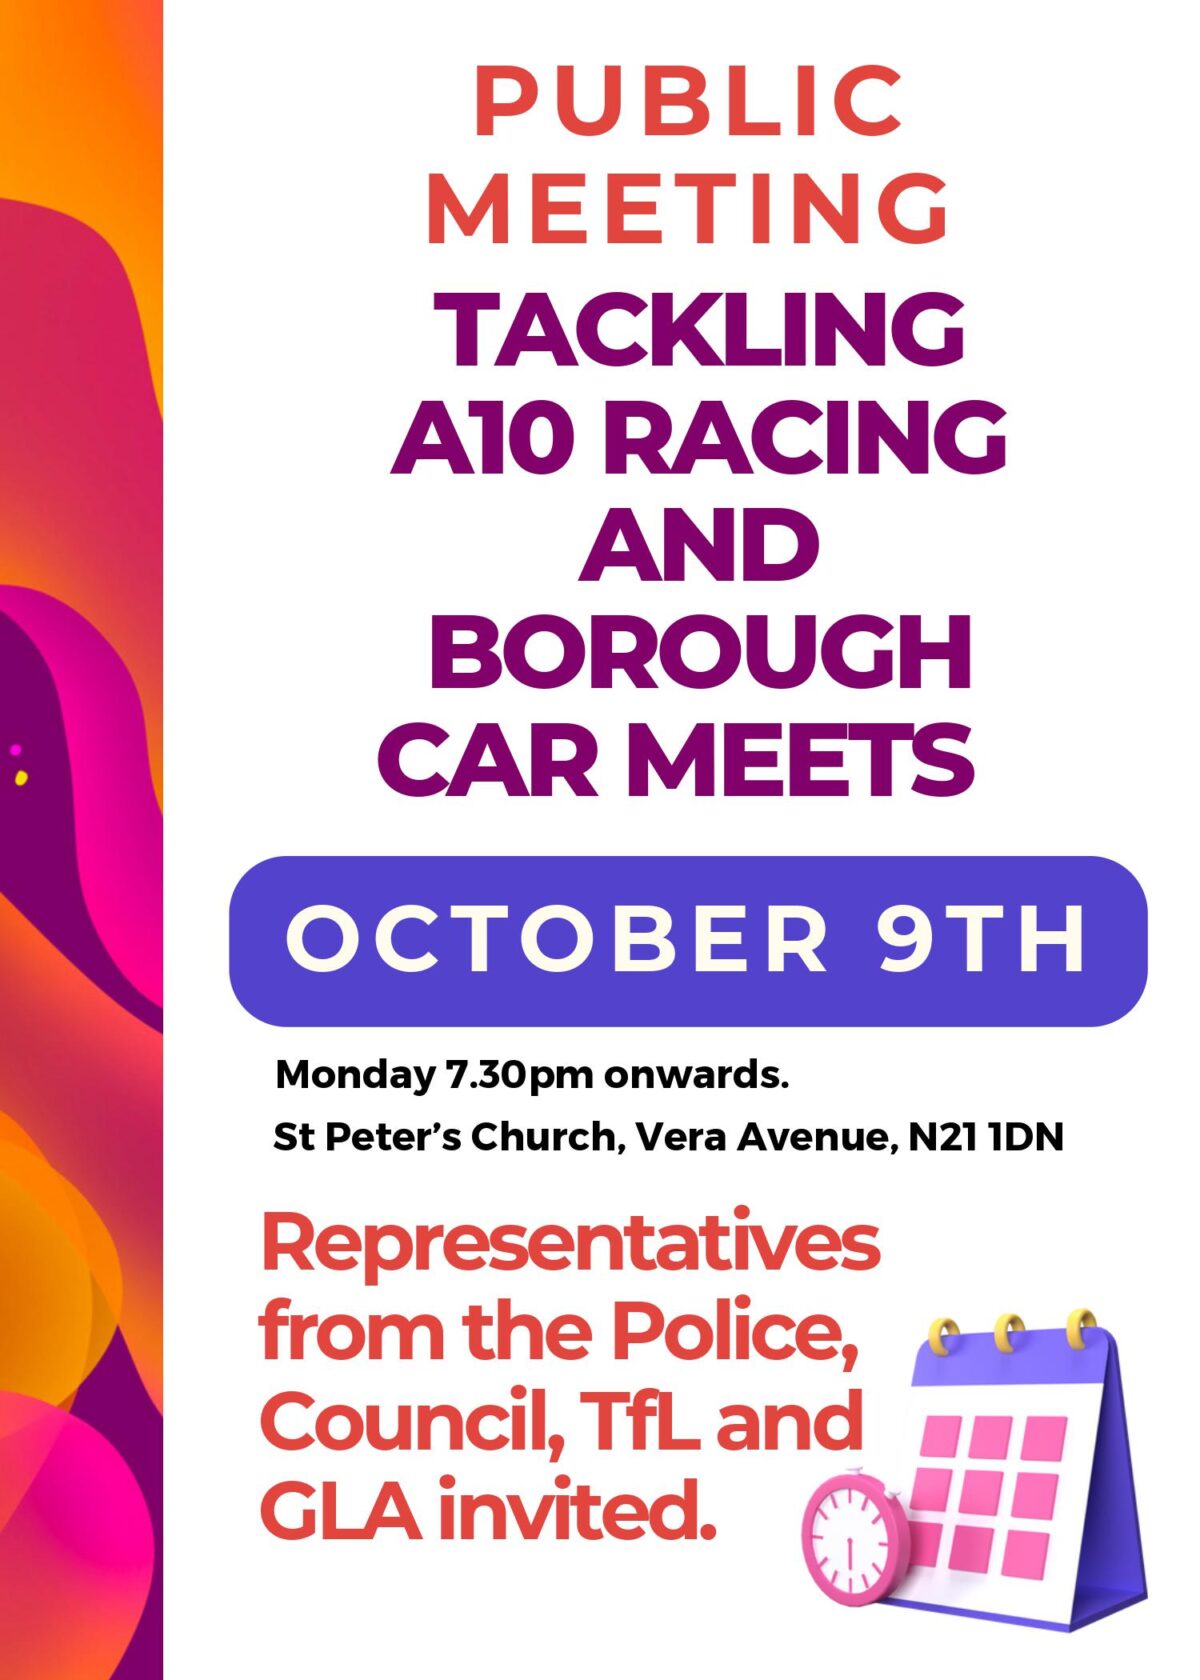 Public Meeting Tackling A10 Racing and Borough Car Meets, Monday 9 October @7.30pm St Peters Church, Vera Avenue